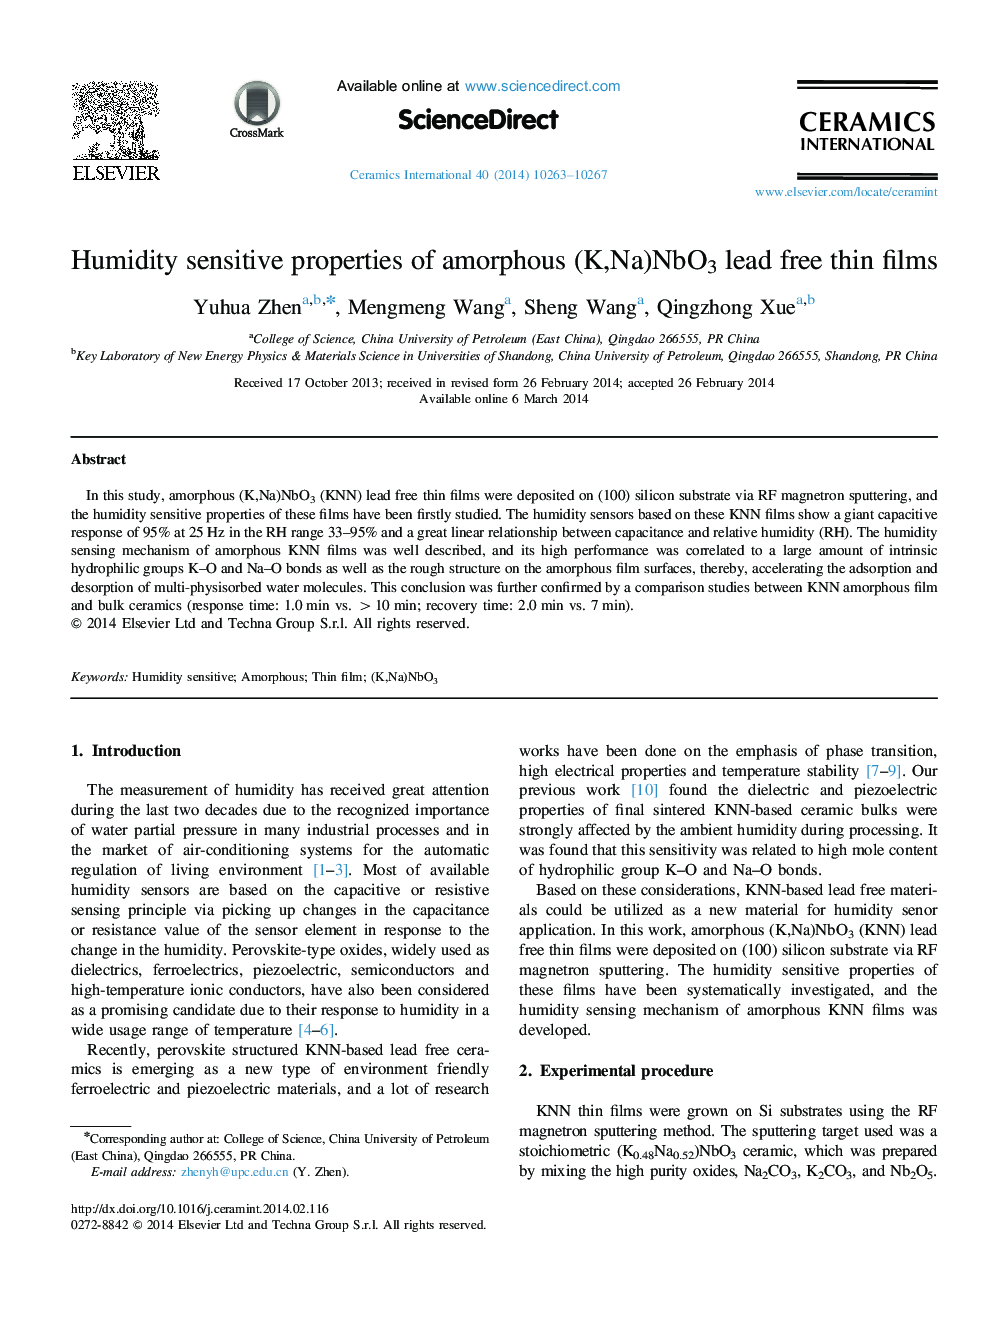 Humidity sensitive properties of amorphous (K,Na)NbO3 lead free thin films